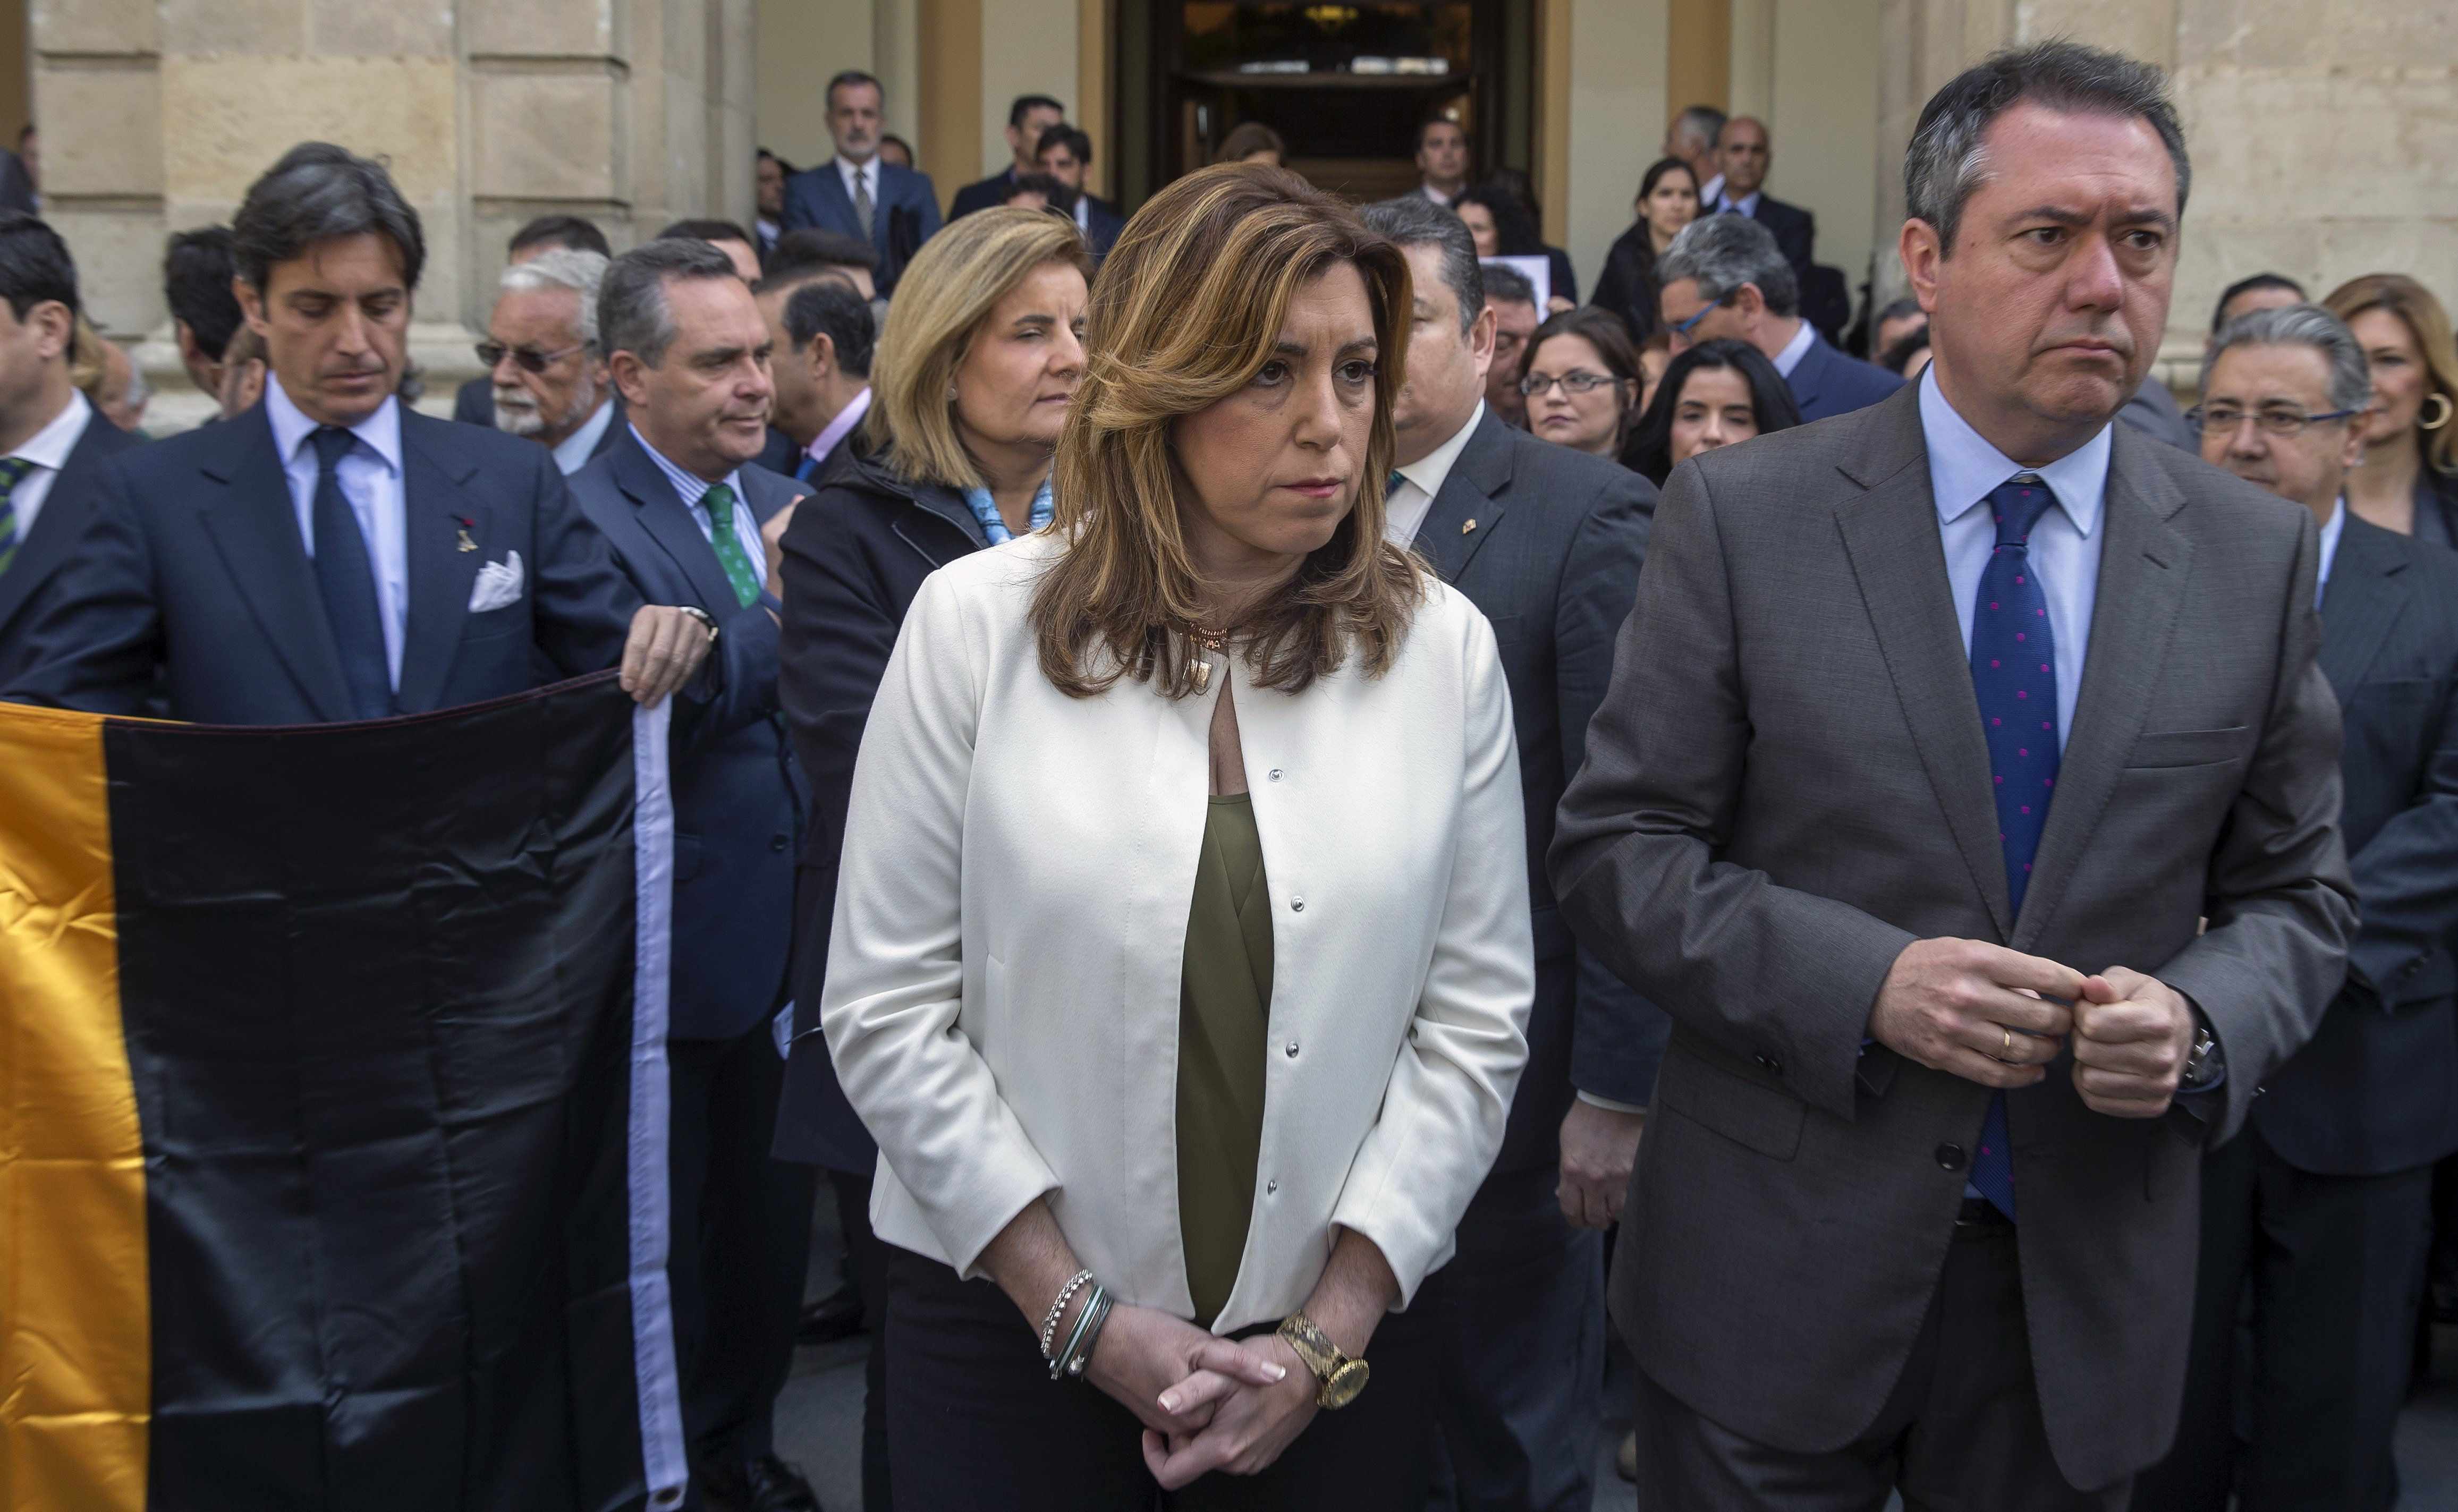 Susana Díaz, davant del dubte de si destronar Sánchez